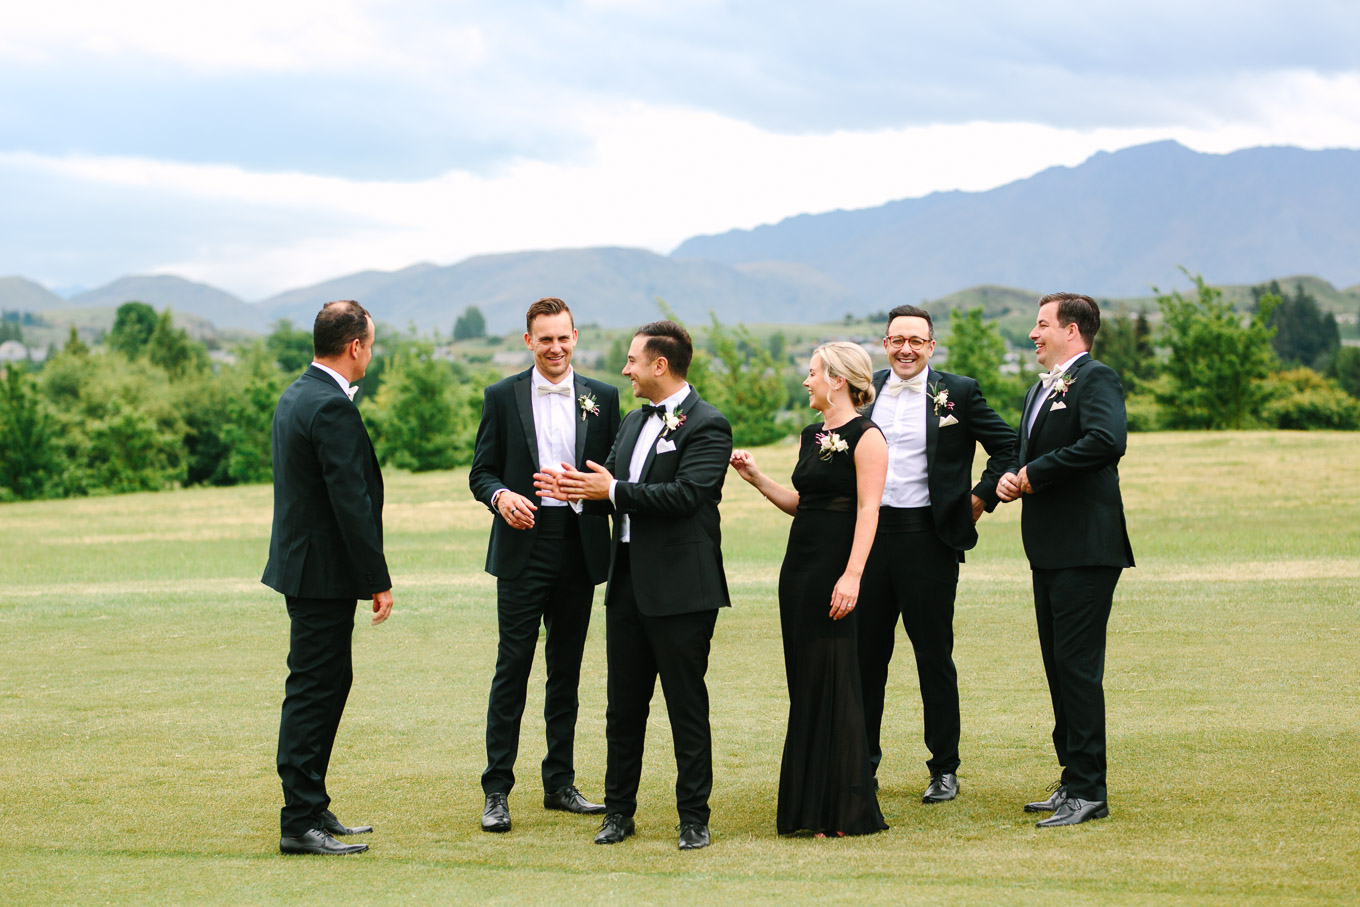 Candid of groomsmen. Millbrook Resort Queenstown New Zealand wedding by Mary Costa Photography | www.marycostaweddings.com